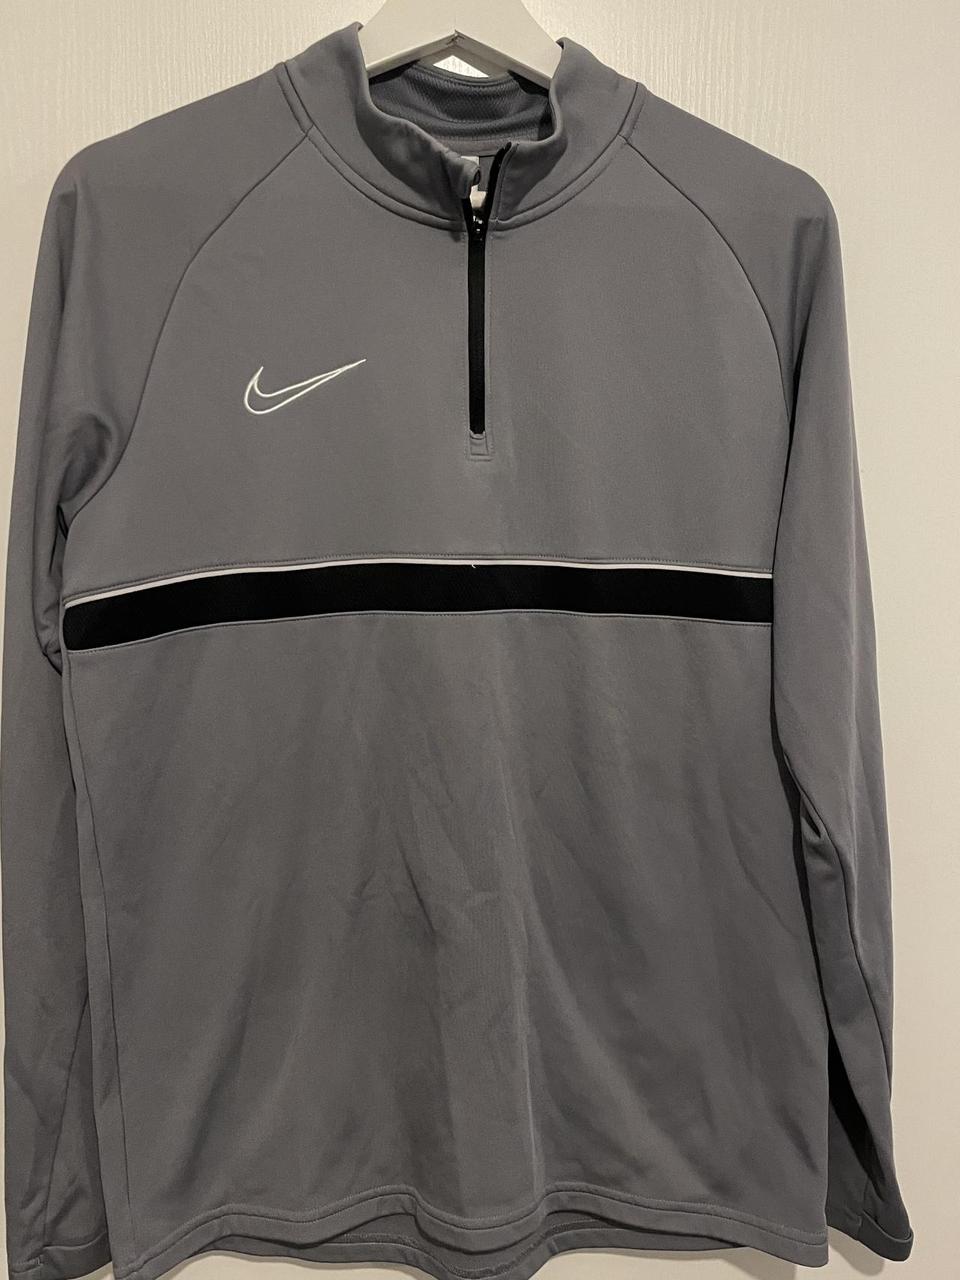 Nike Dri Fit Grey Quarter zip Perfect for training... - Depop